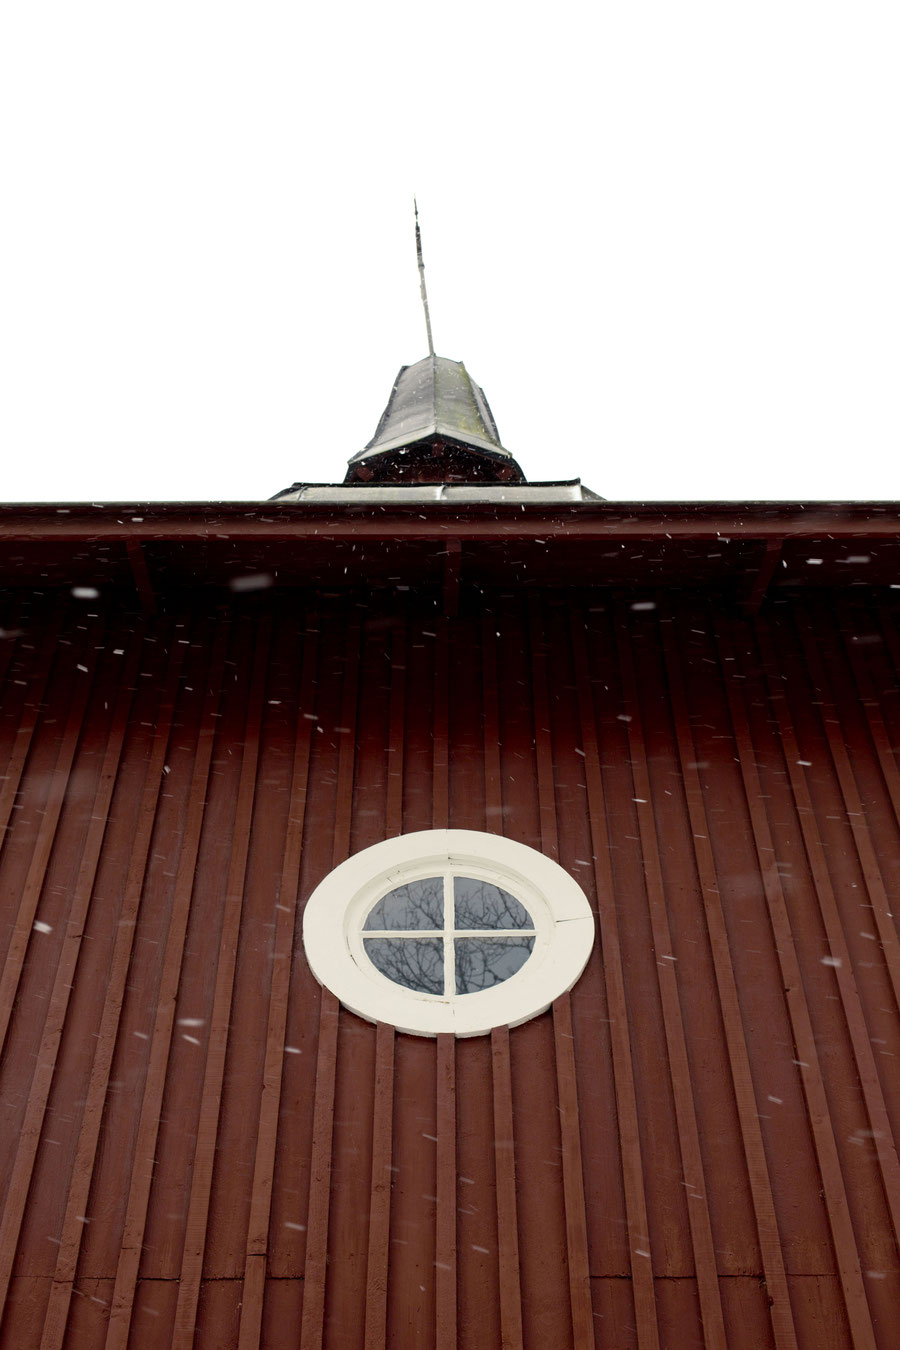 The local chappel, Vantaa, Finland